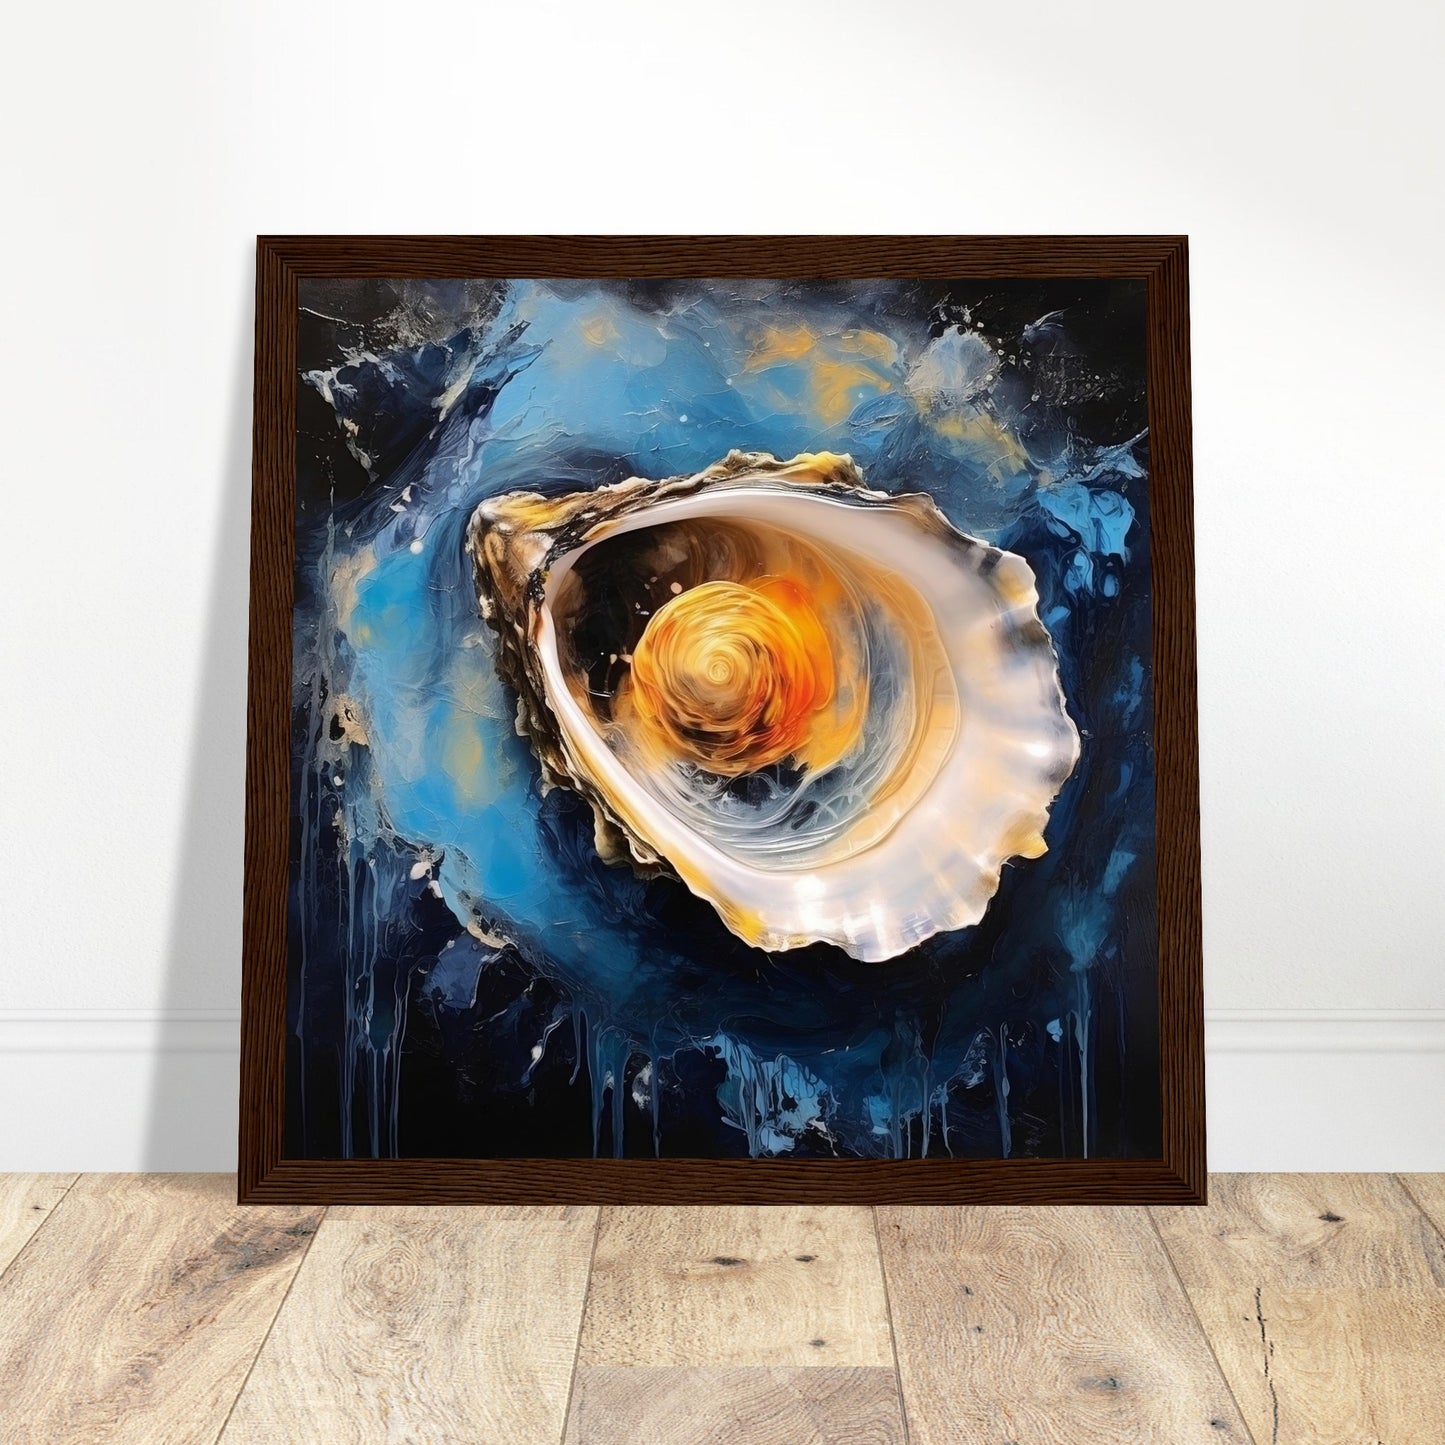 Oyster Collection Sea Artwork #6 - Print Room Ltd Black frame 50x50 cm / 20x20"